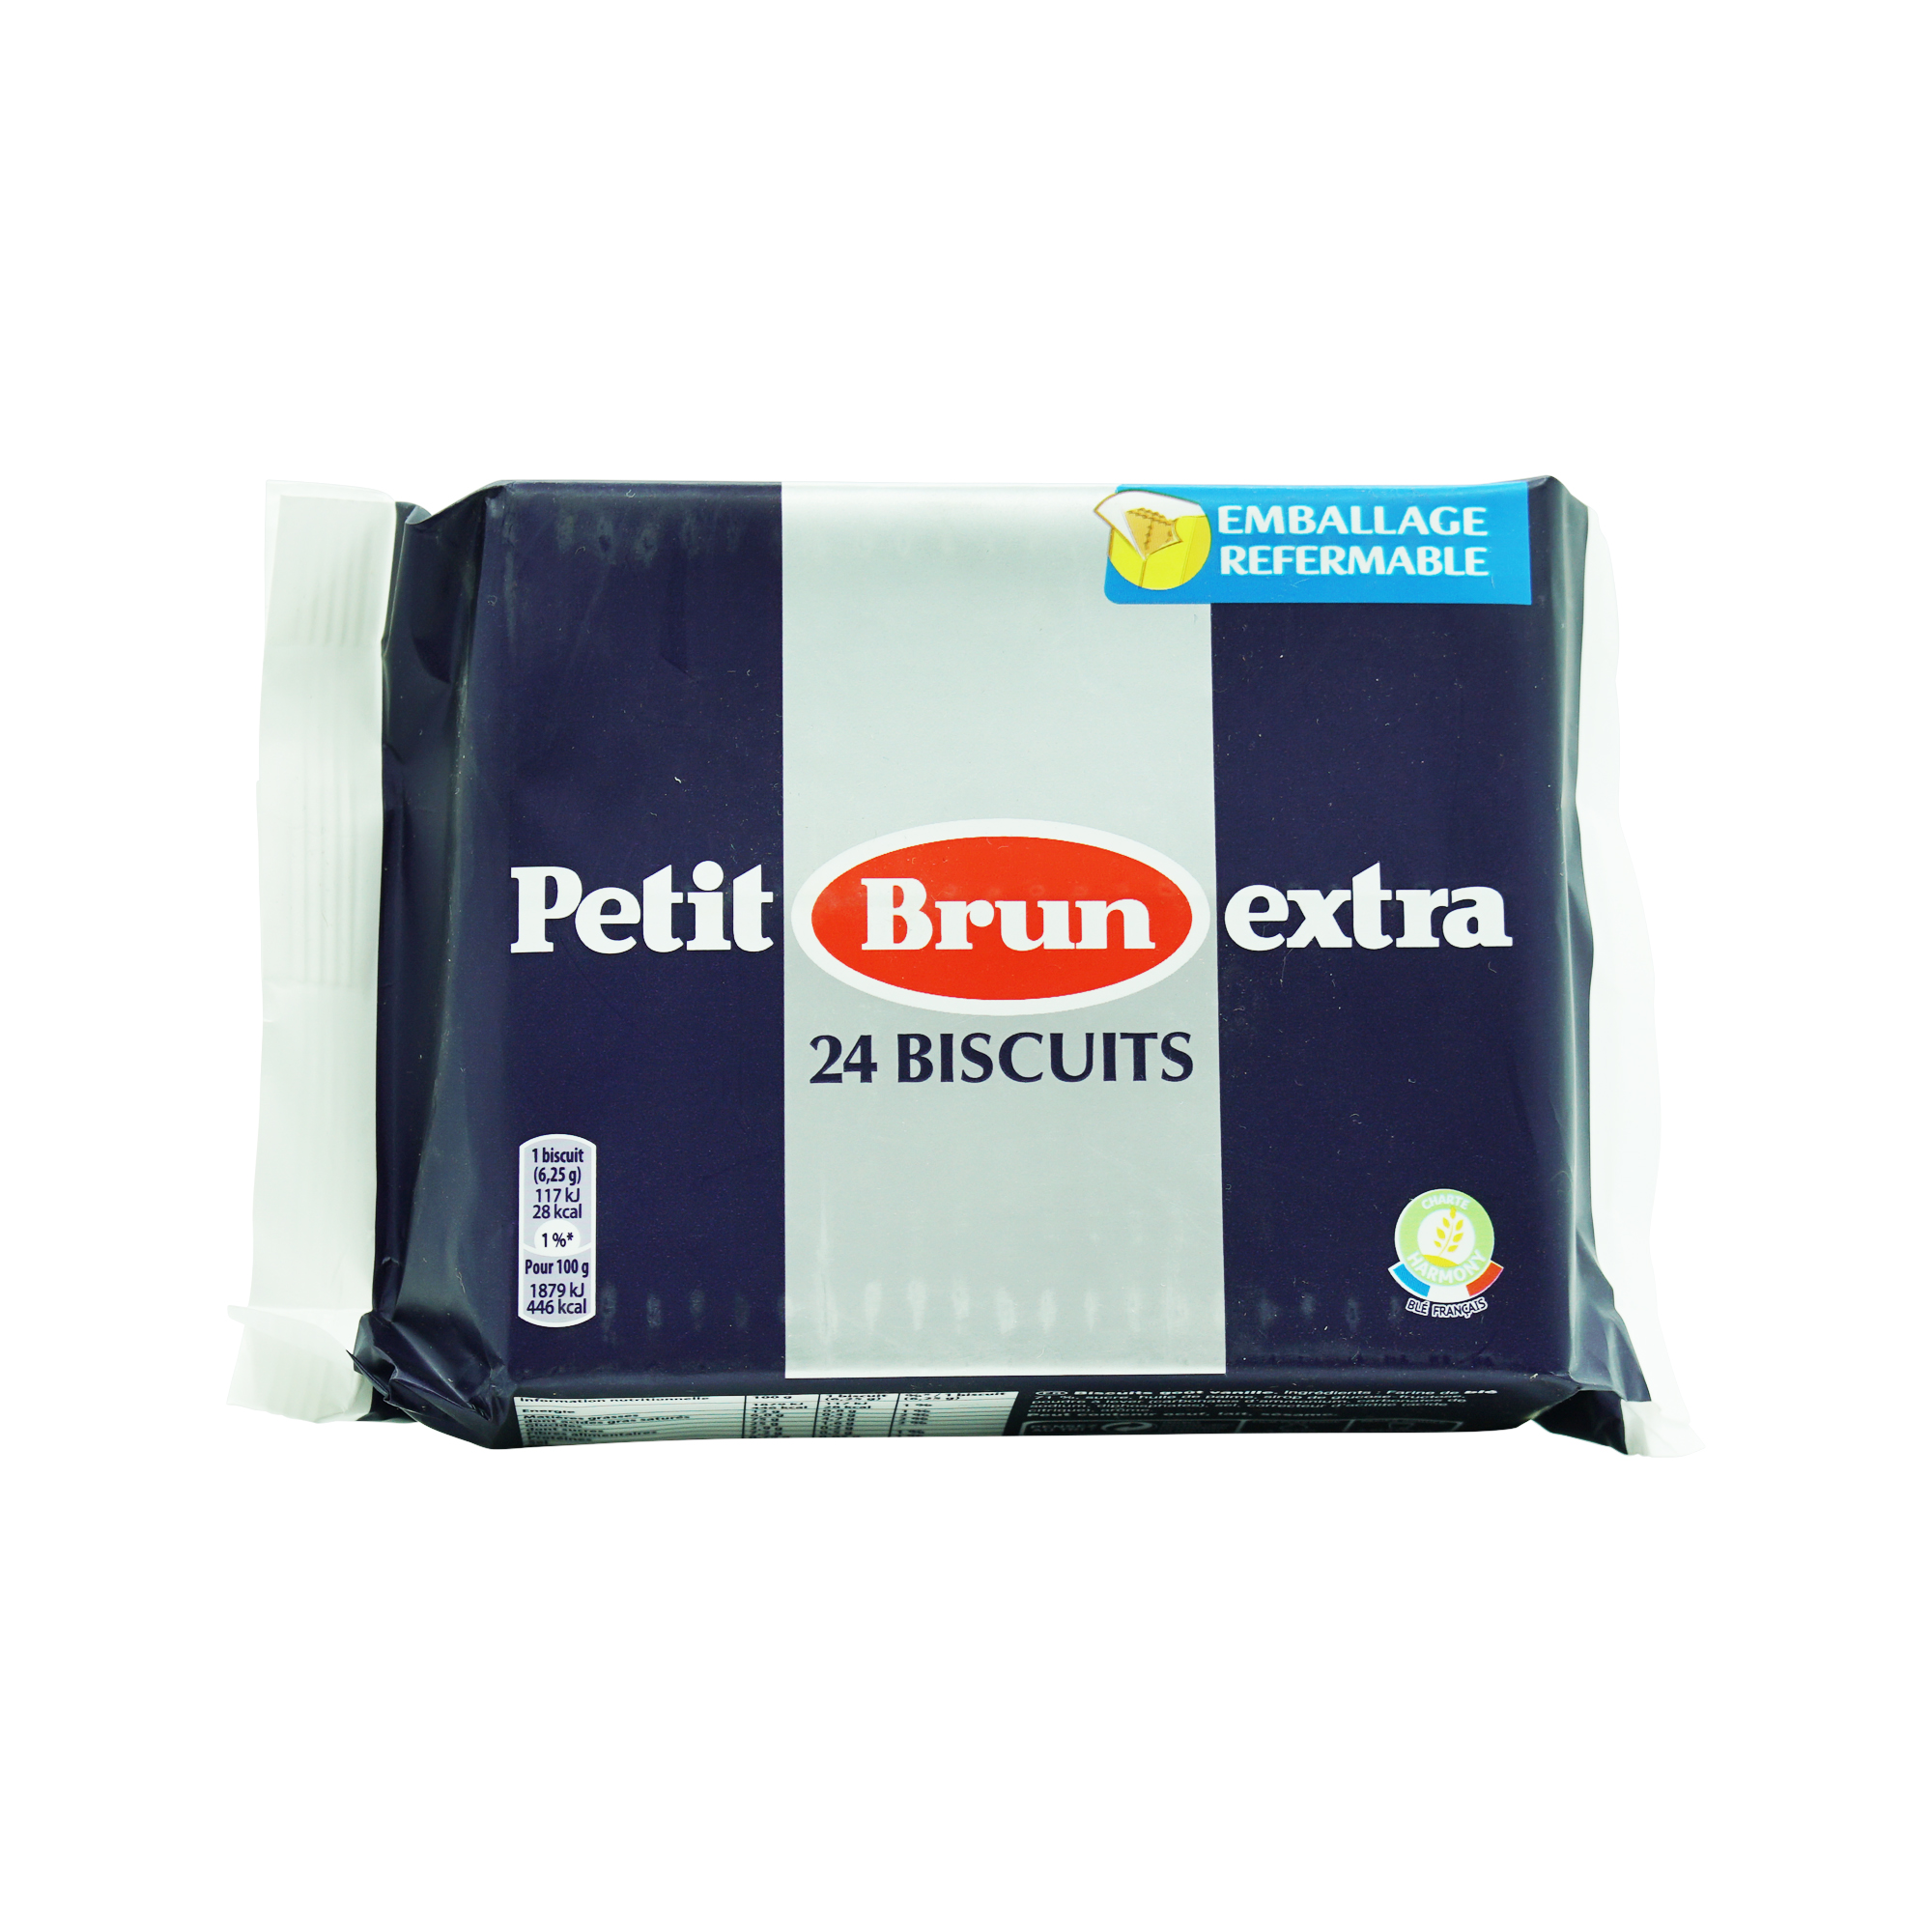 Lu Petit Brun Extra (150g)